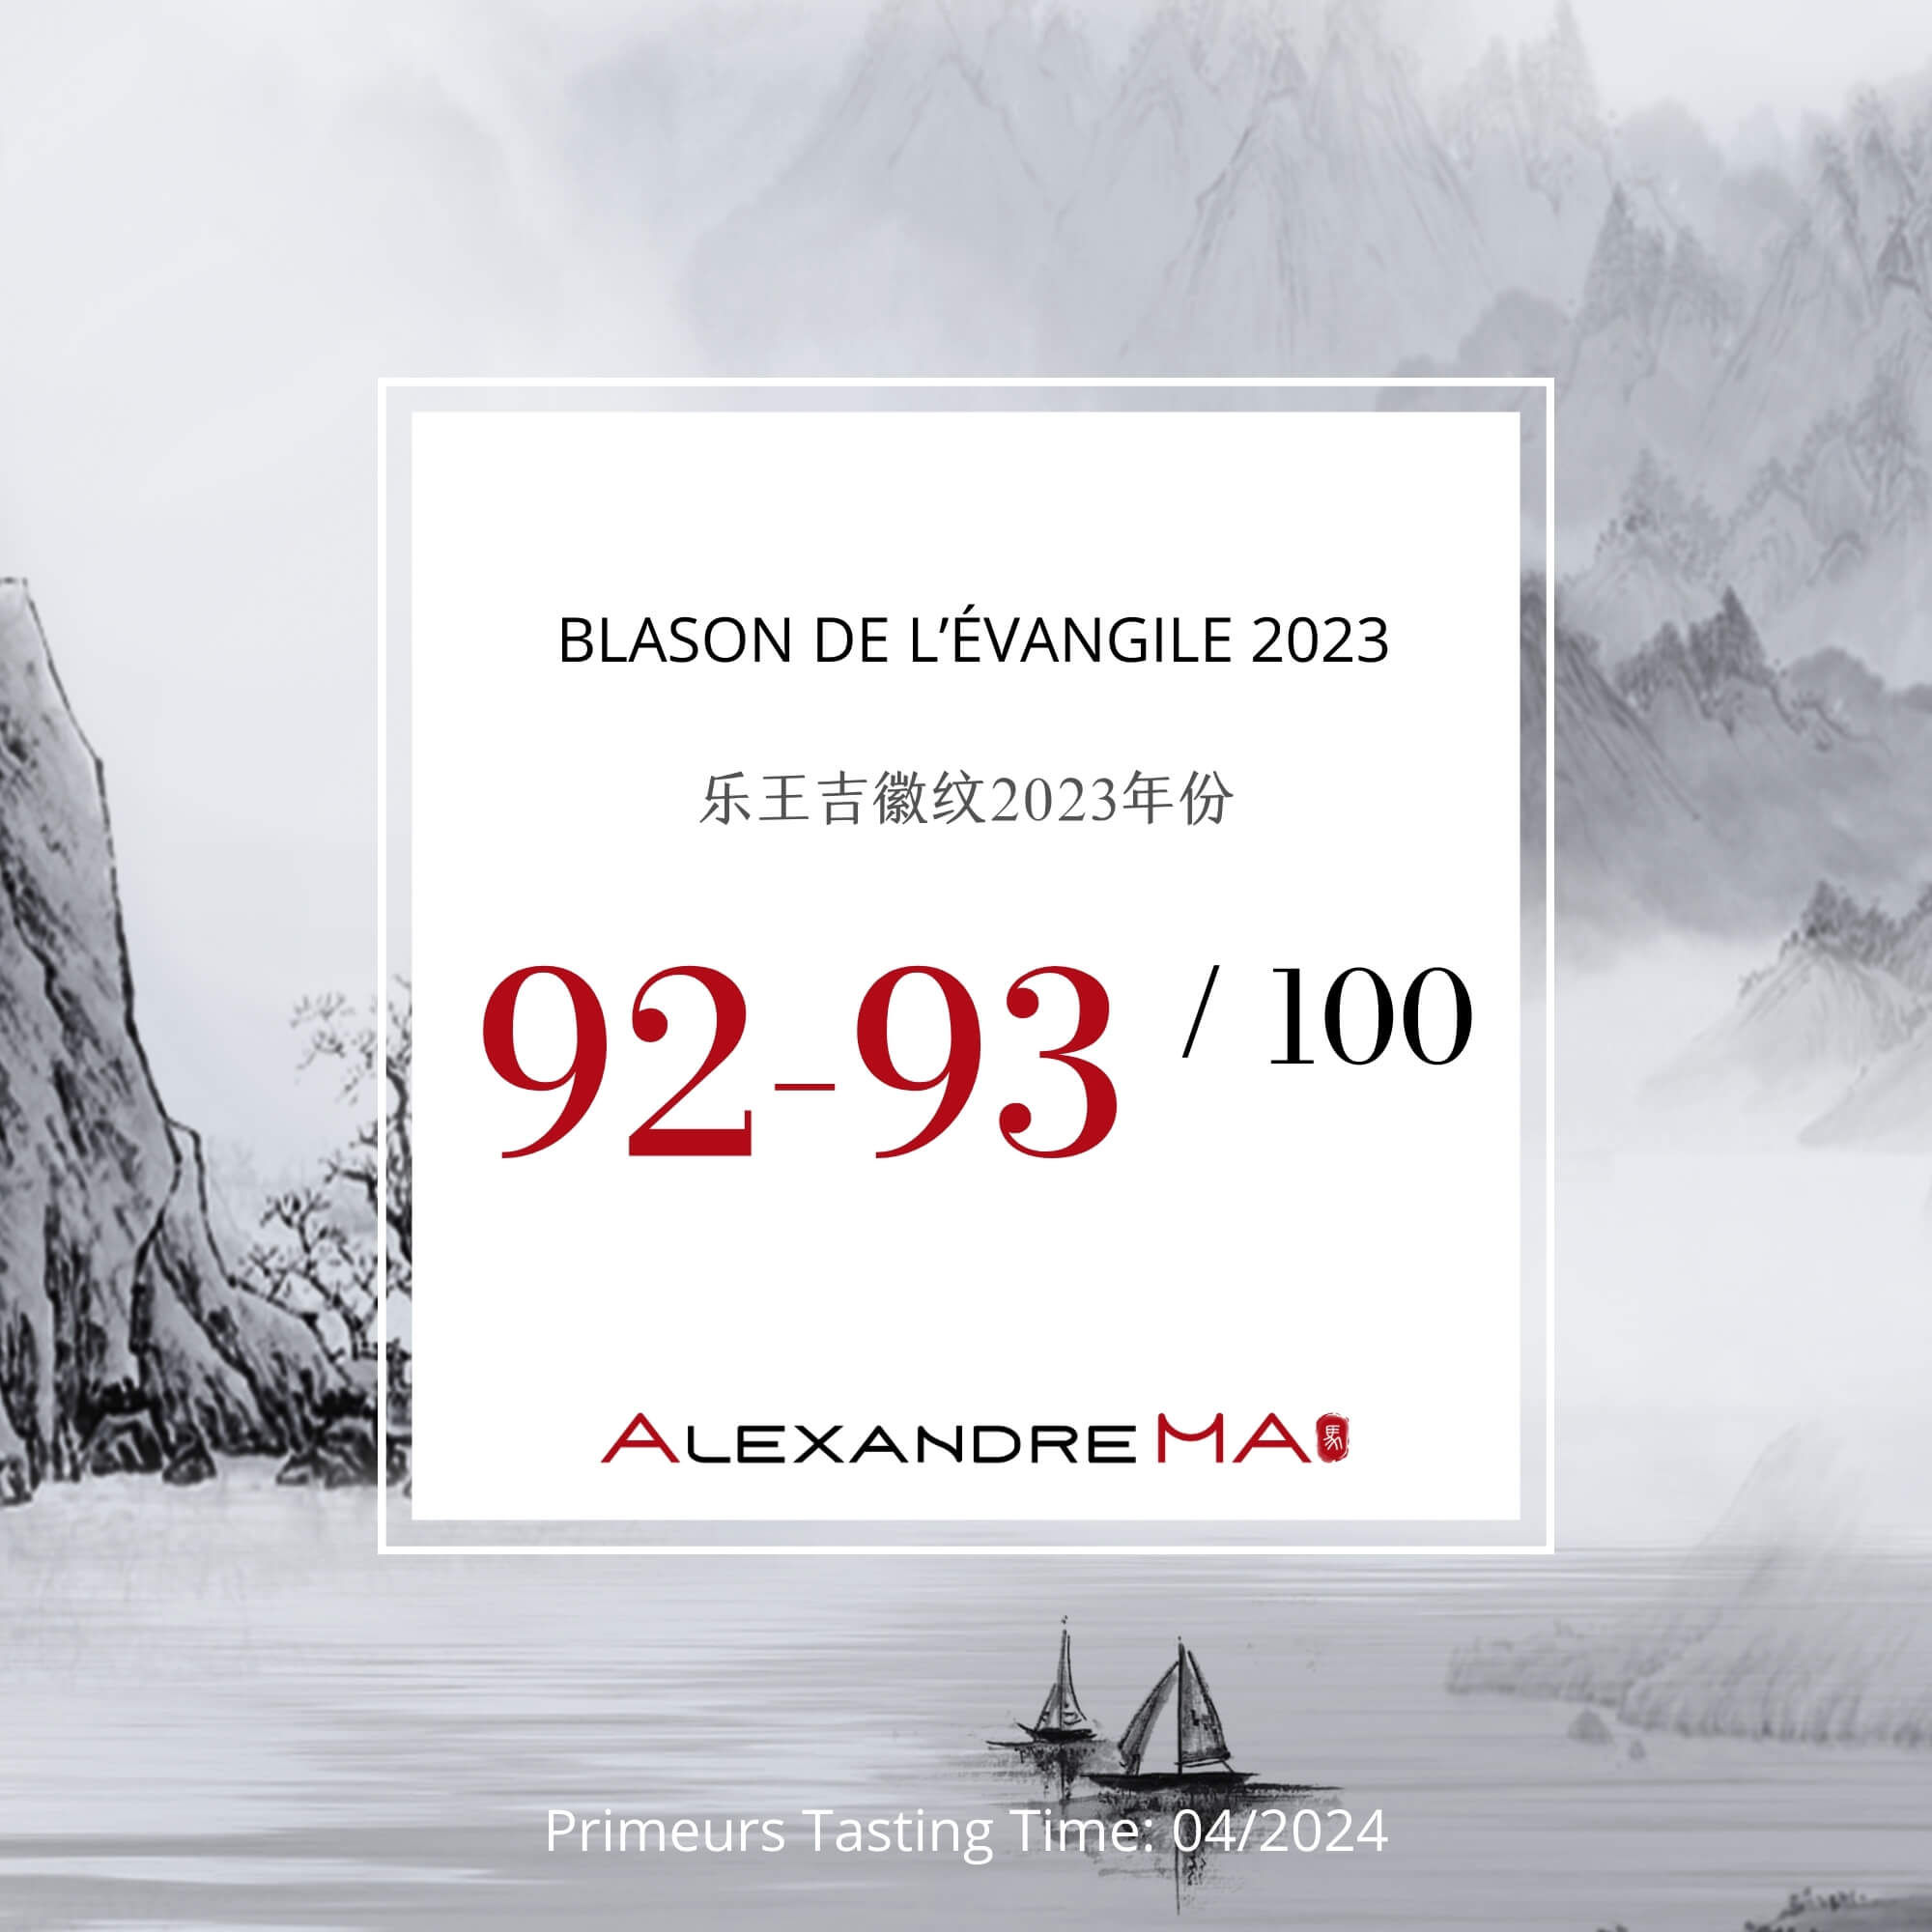 Blason de l’Évangile 2023 Primeurs - Alexandre MA